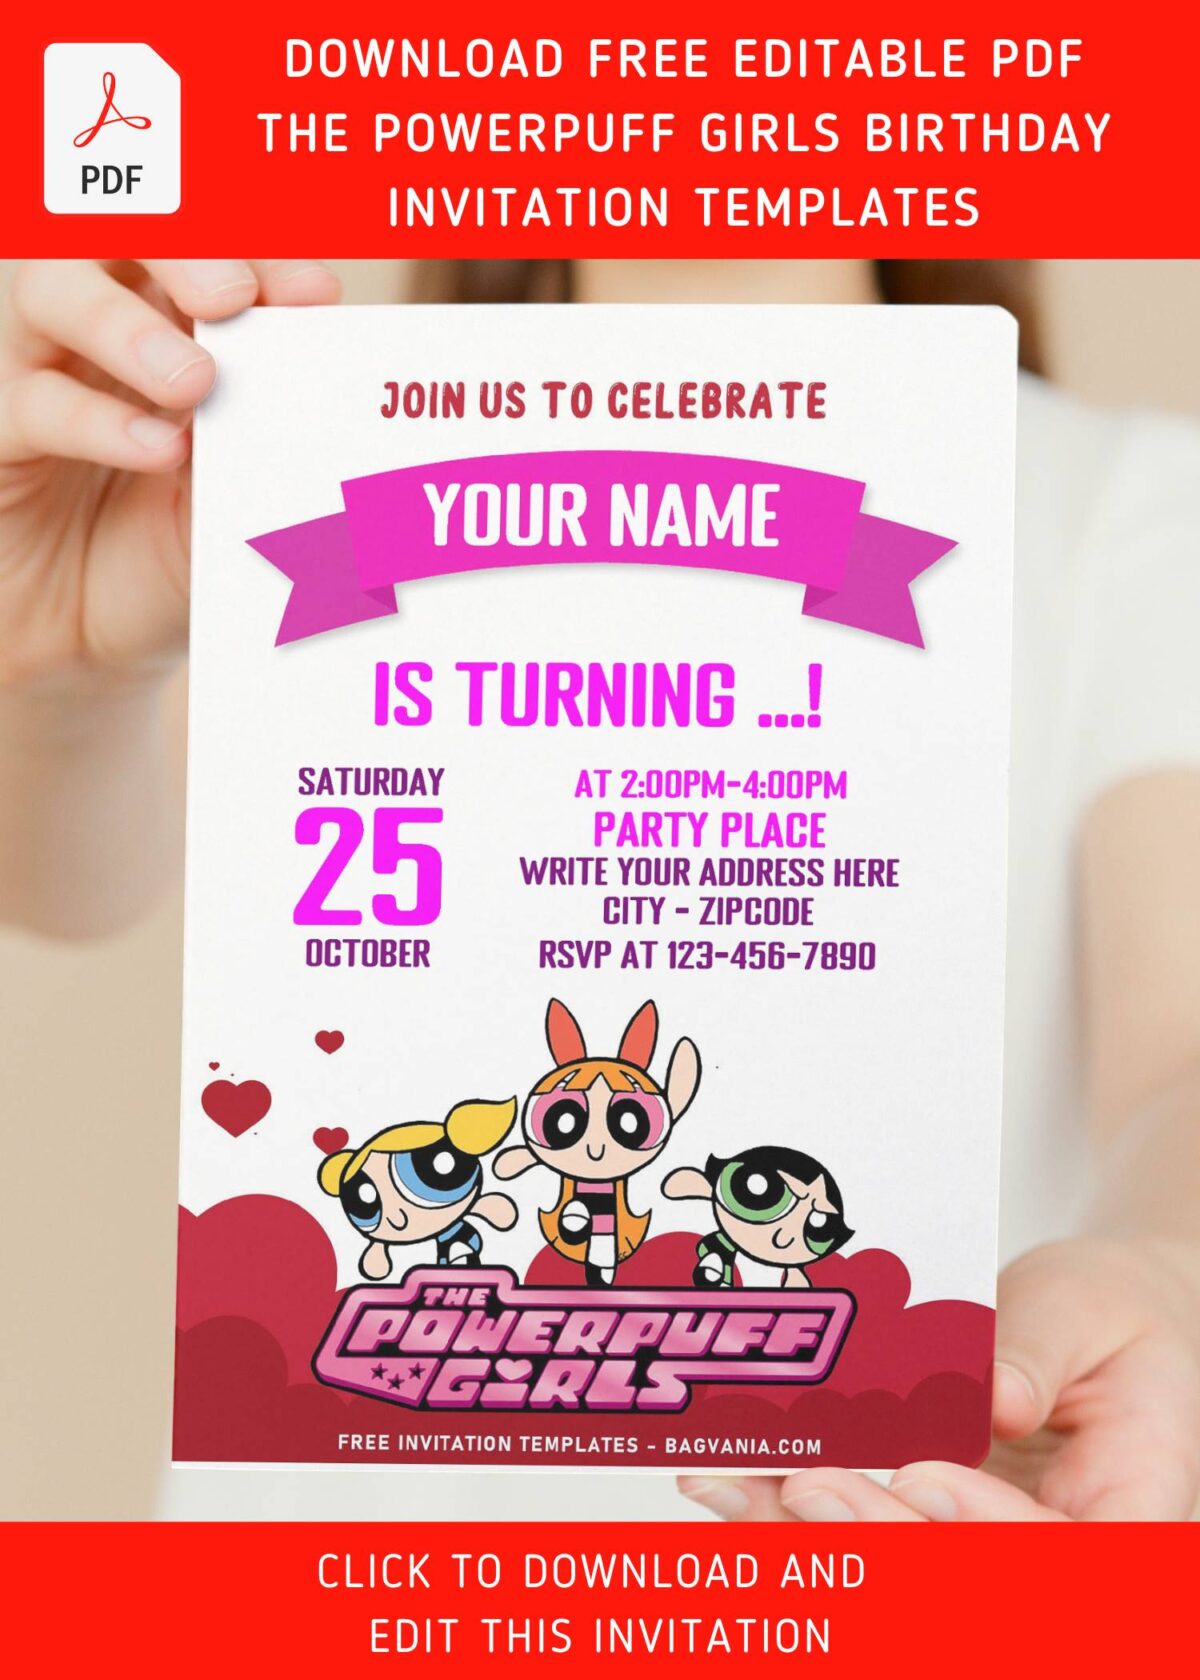 (Free Editable PDF) You Glow Girl Powerpuff Girls Birthday Invitation Templates with adorable Bubble